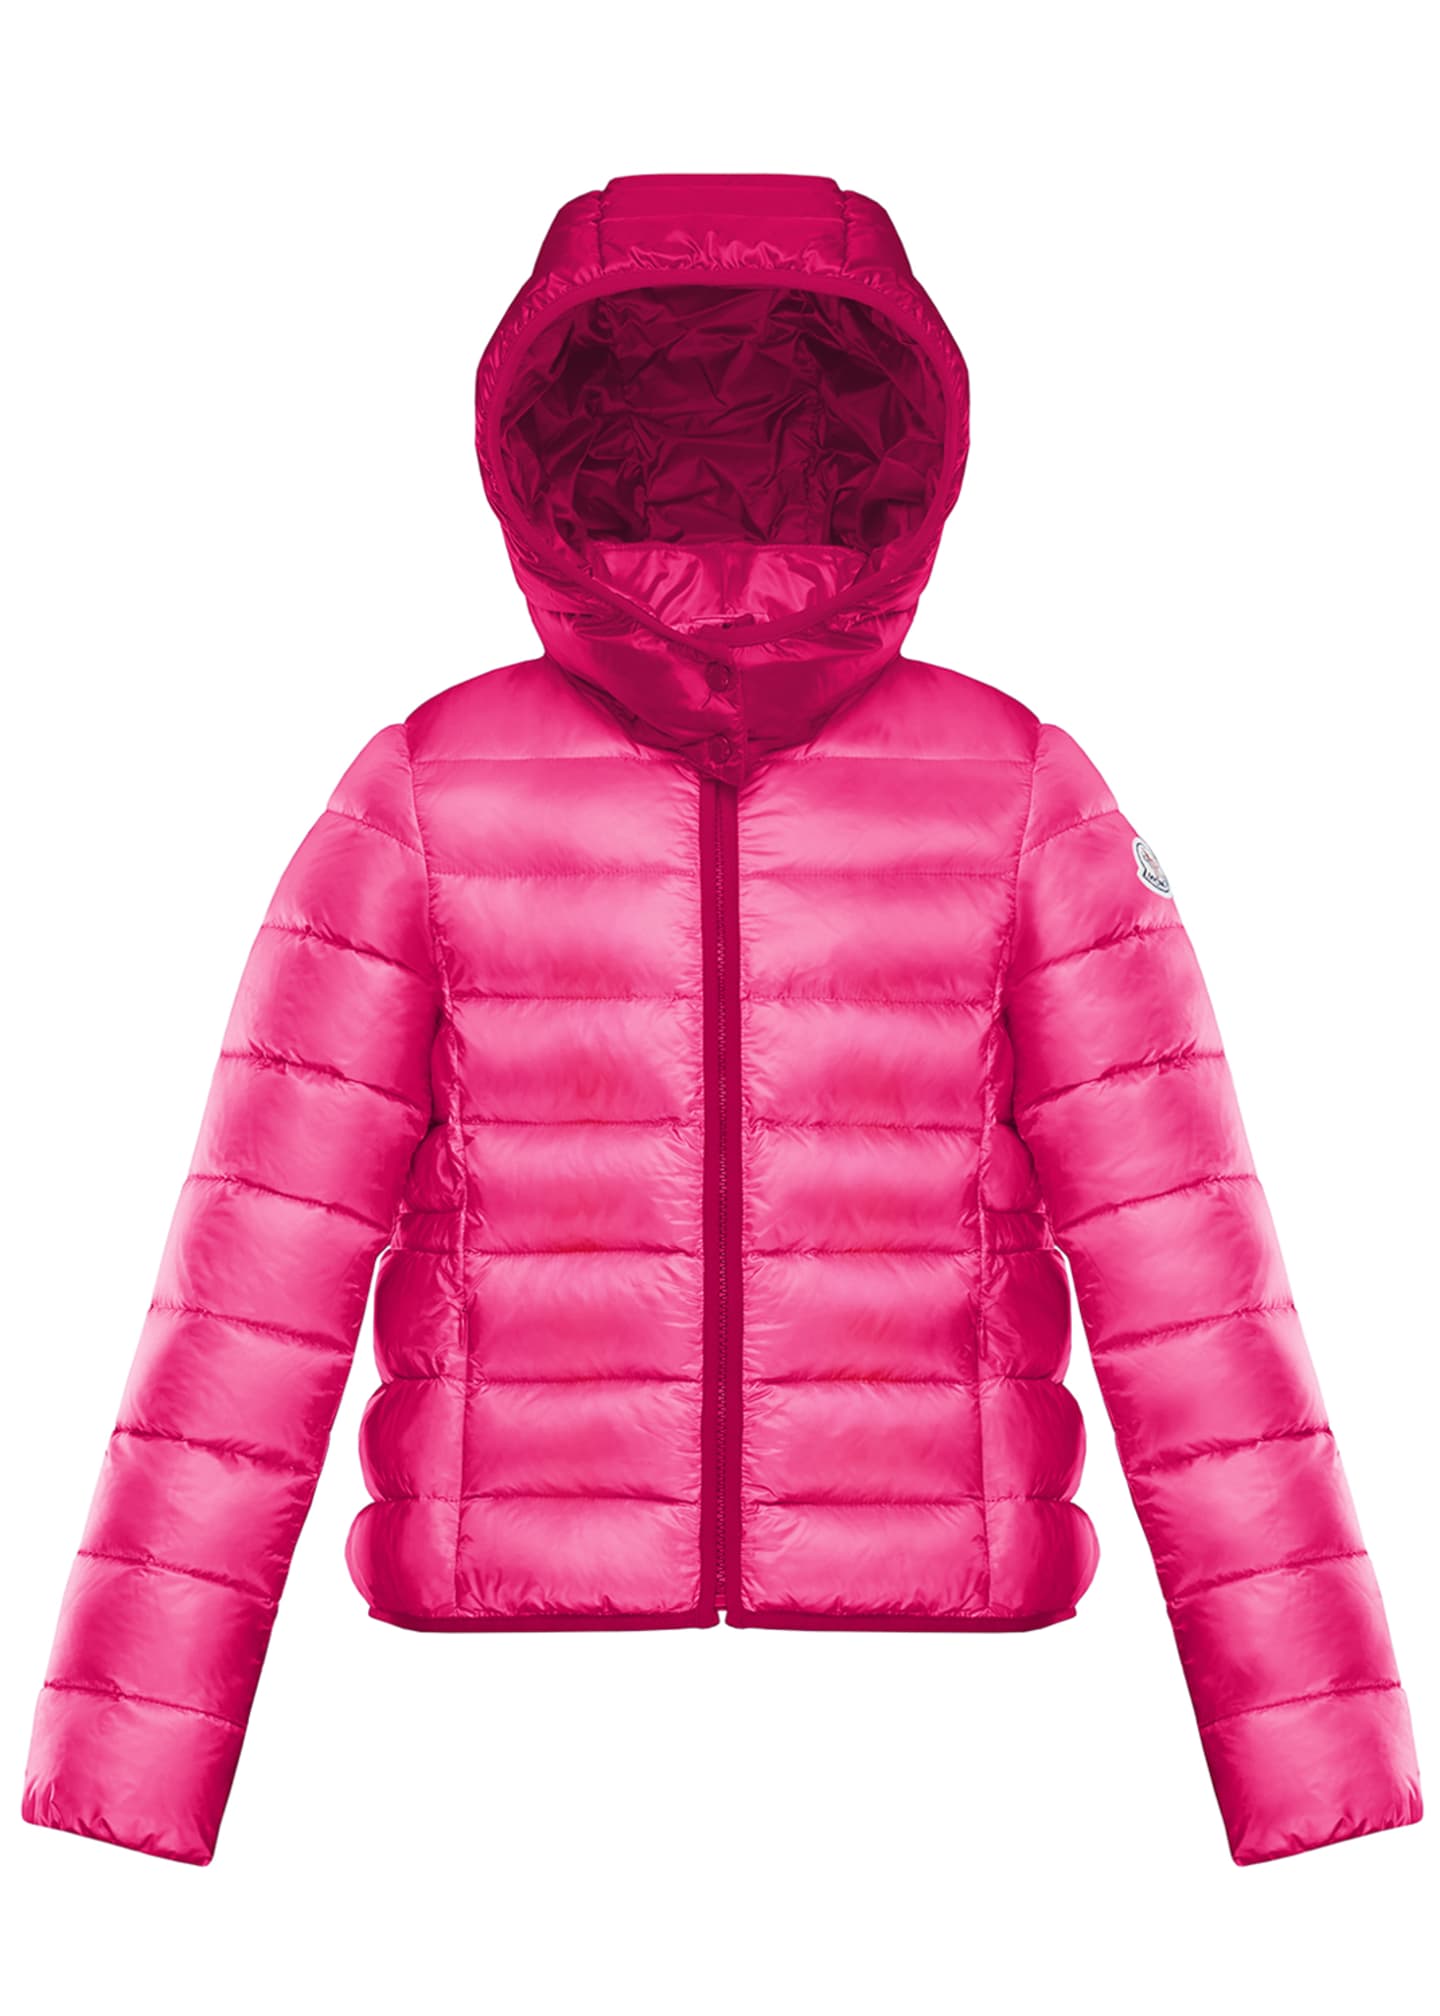 Moncler Adelie Puffer Jacket w/ Hood, Light Pink, Size 4-6